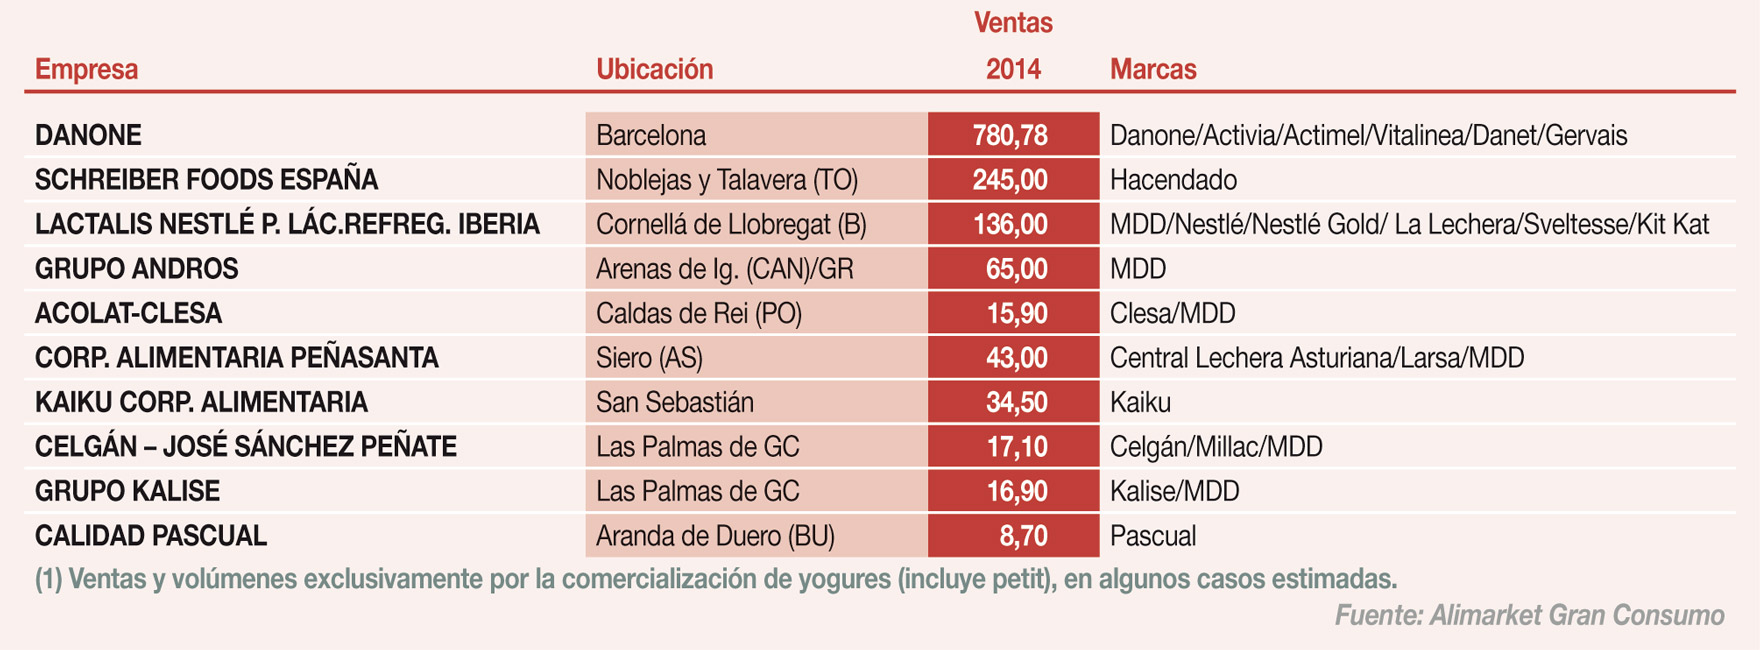 Principales empresas elaboradoras de yogures en España (1)